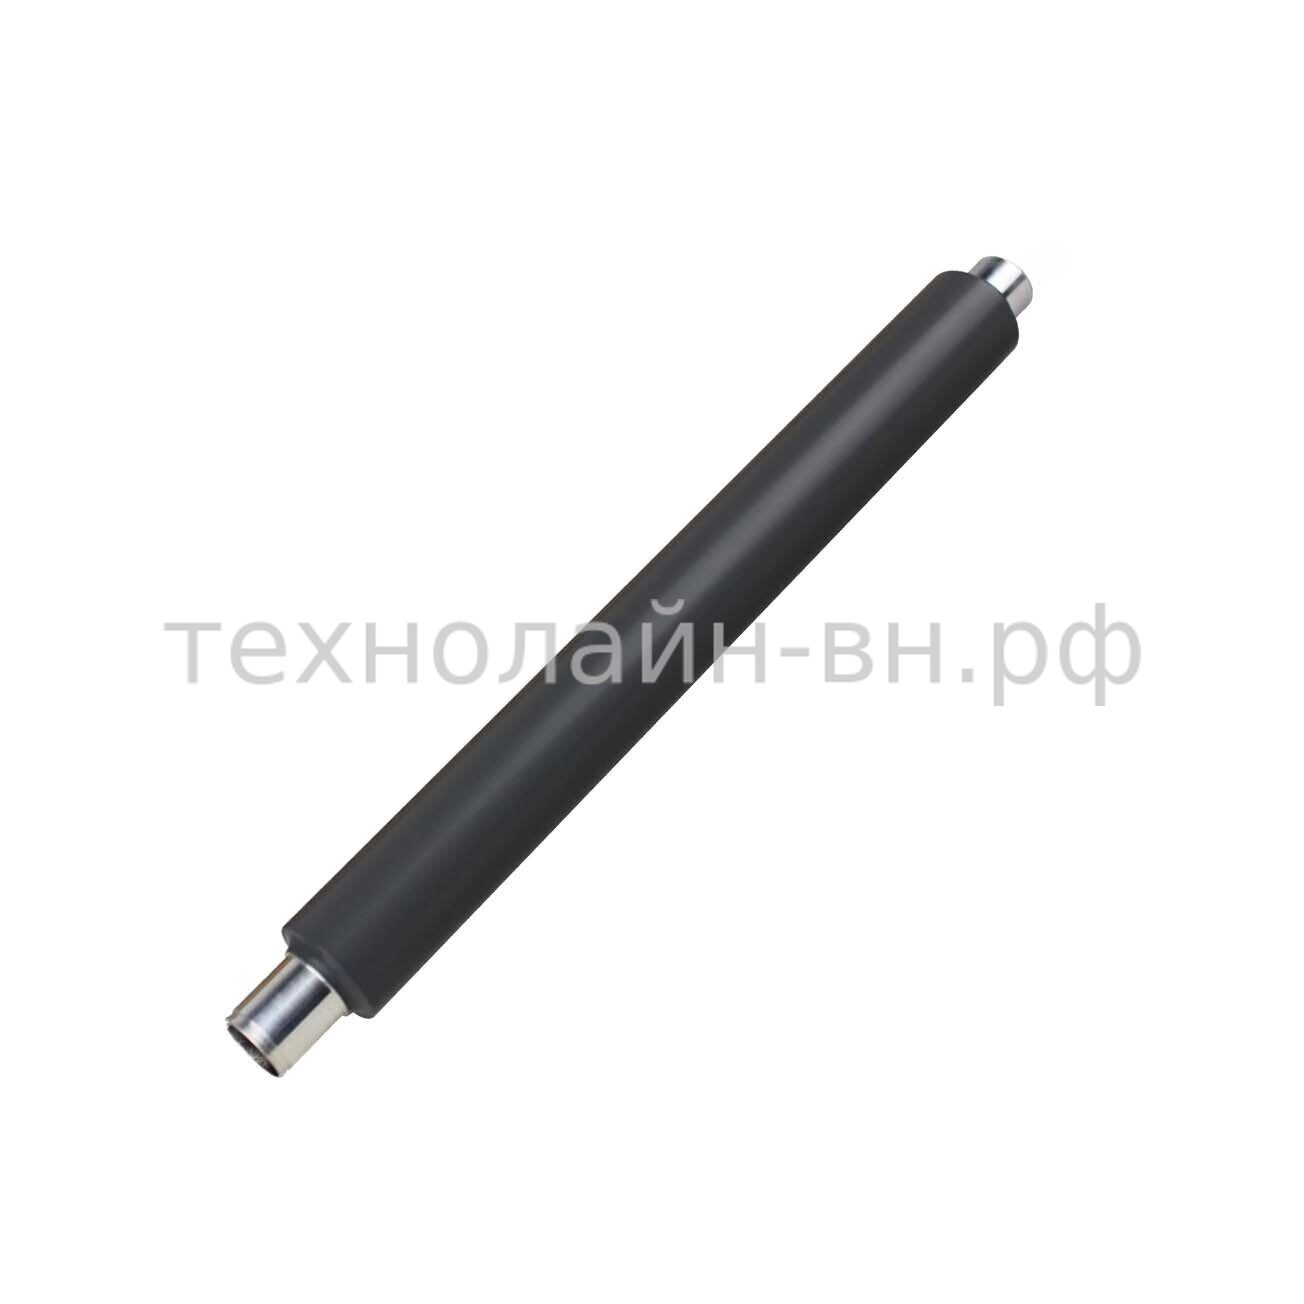 Вал тефлоновый (верхний) Hi-Black для Kyocera FS-4100DN/ 4200DN/ 4300DN (S)